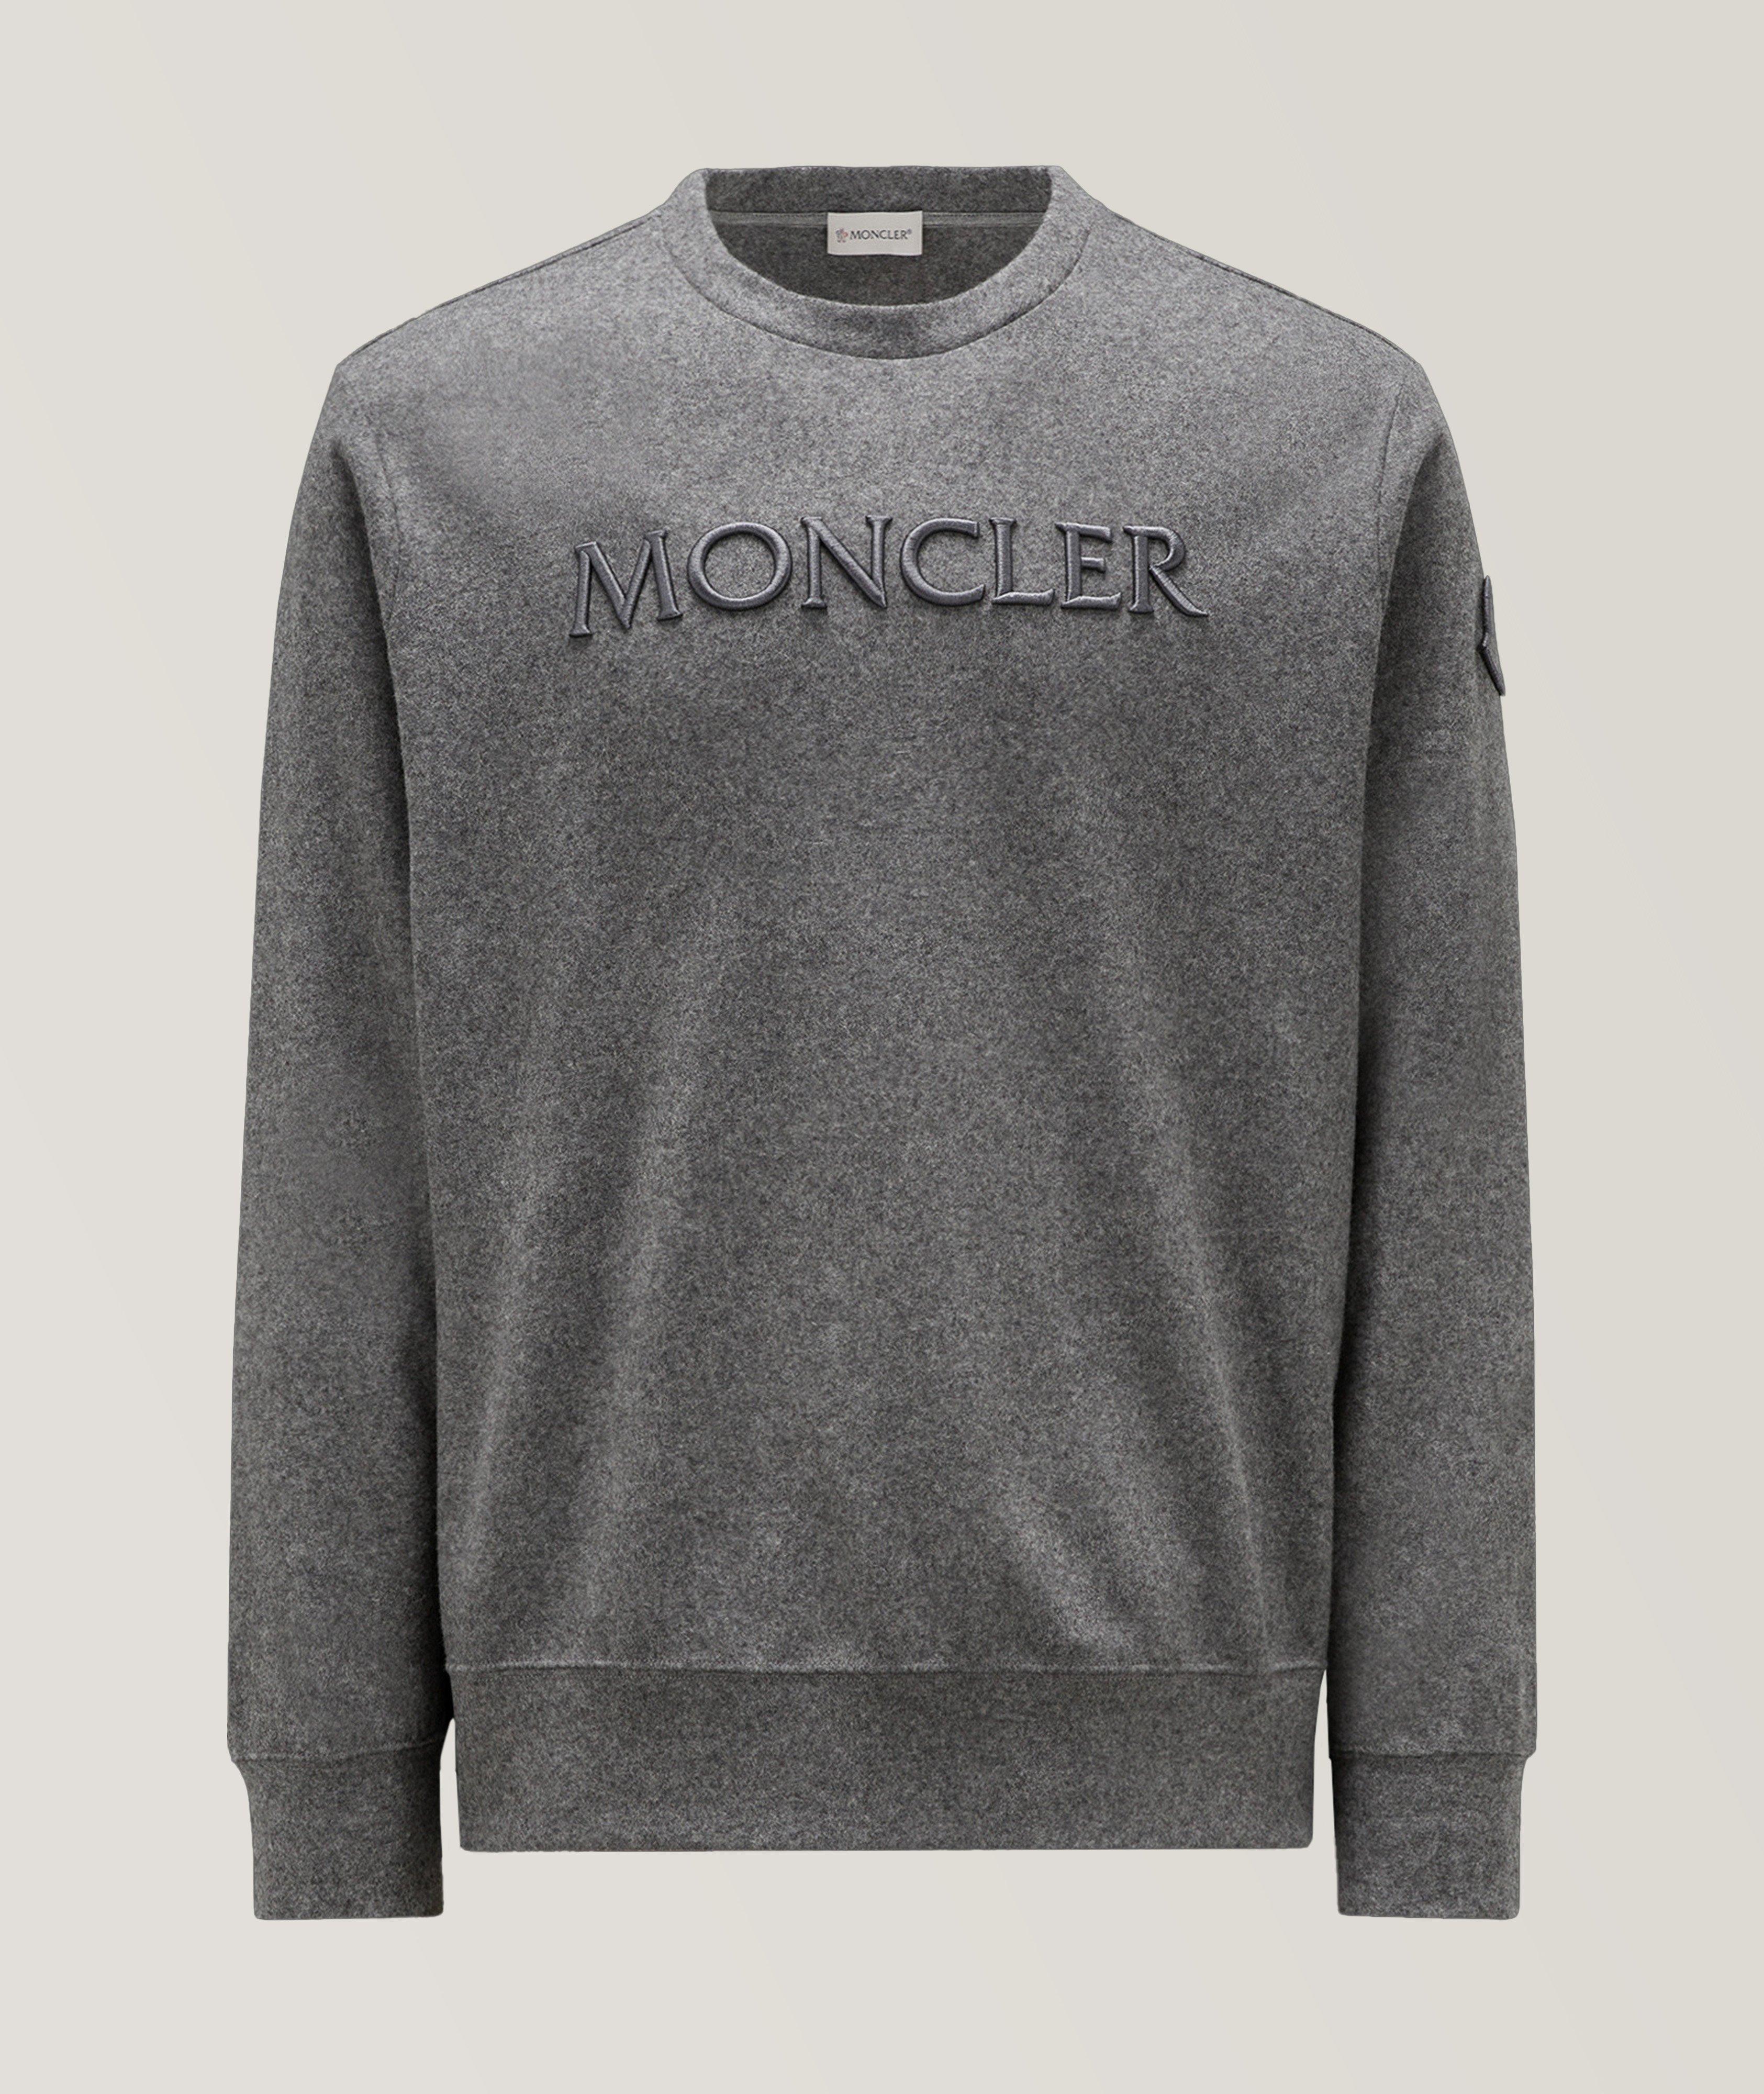 Moncler Logo Embroidered Mélange Crewneck Sweater